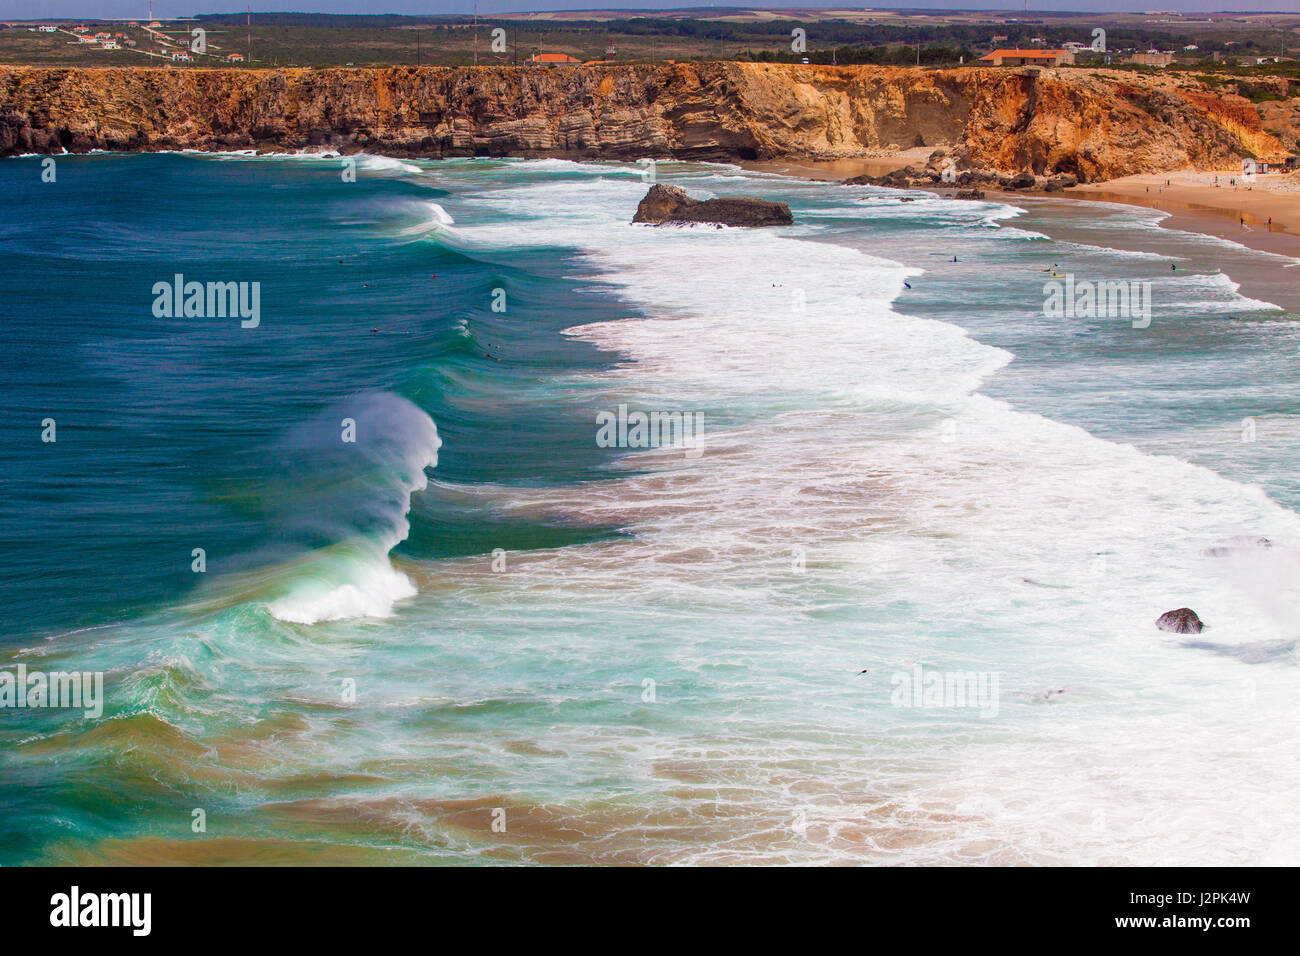 The beach on Algarve coast.  Continental Europe's most South-western point. Portugal Algarve Region Sagres Stock Photo